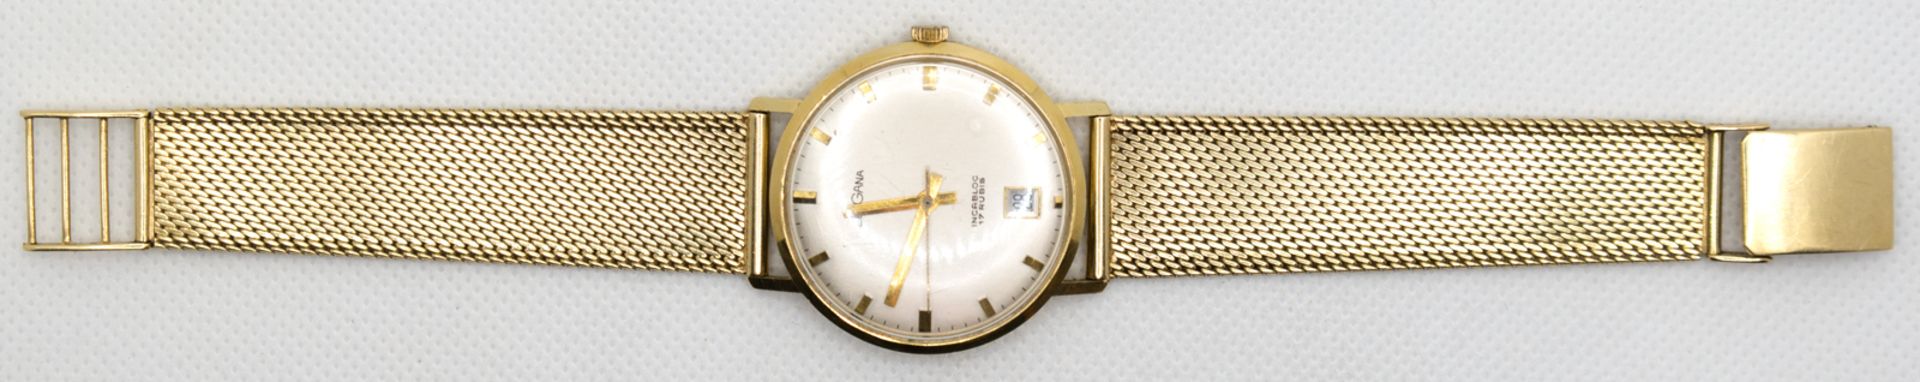 Herren-Armbanduhr "Bergana", 585er GG, Handaufzug, perlmuttfarbenes Zifferblatt mit Stabindizes, ze